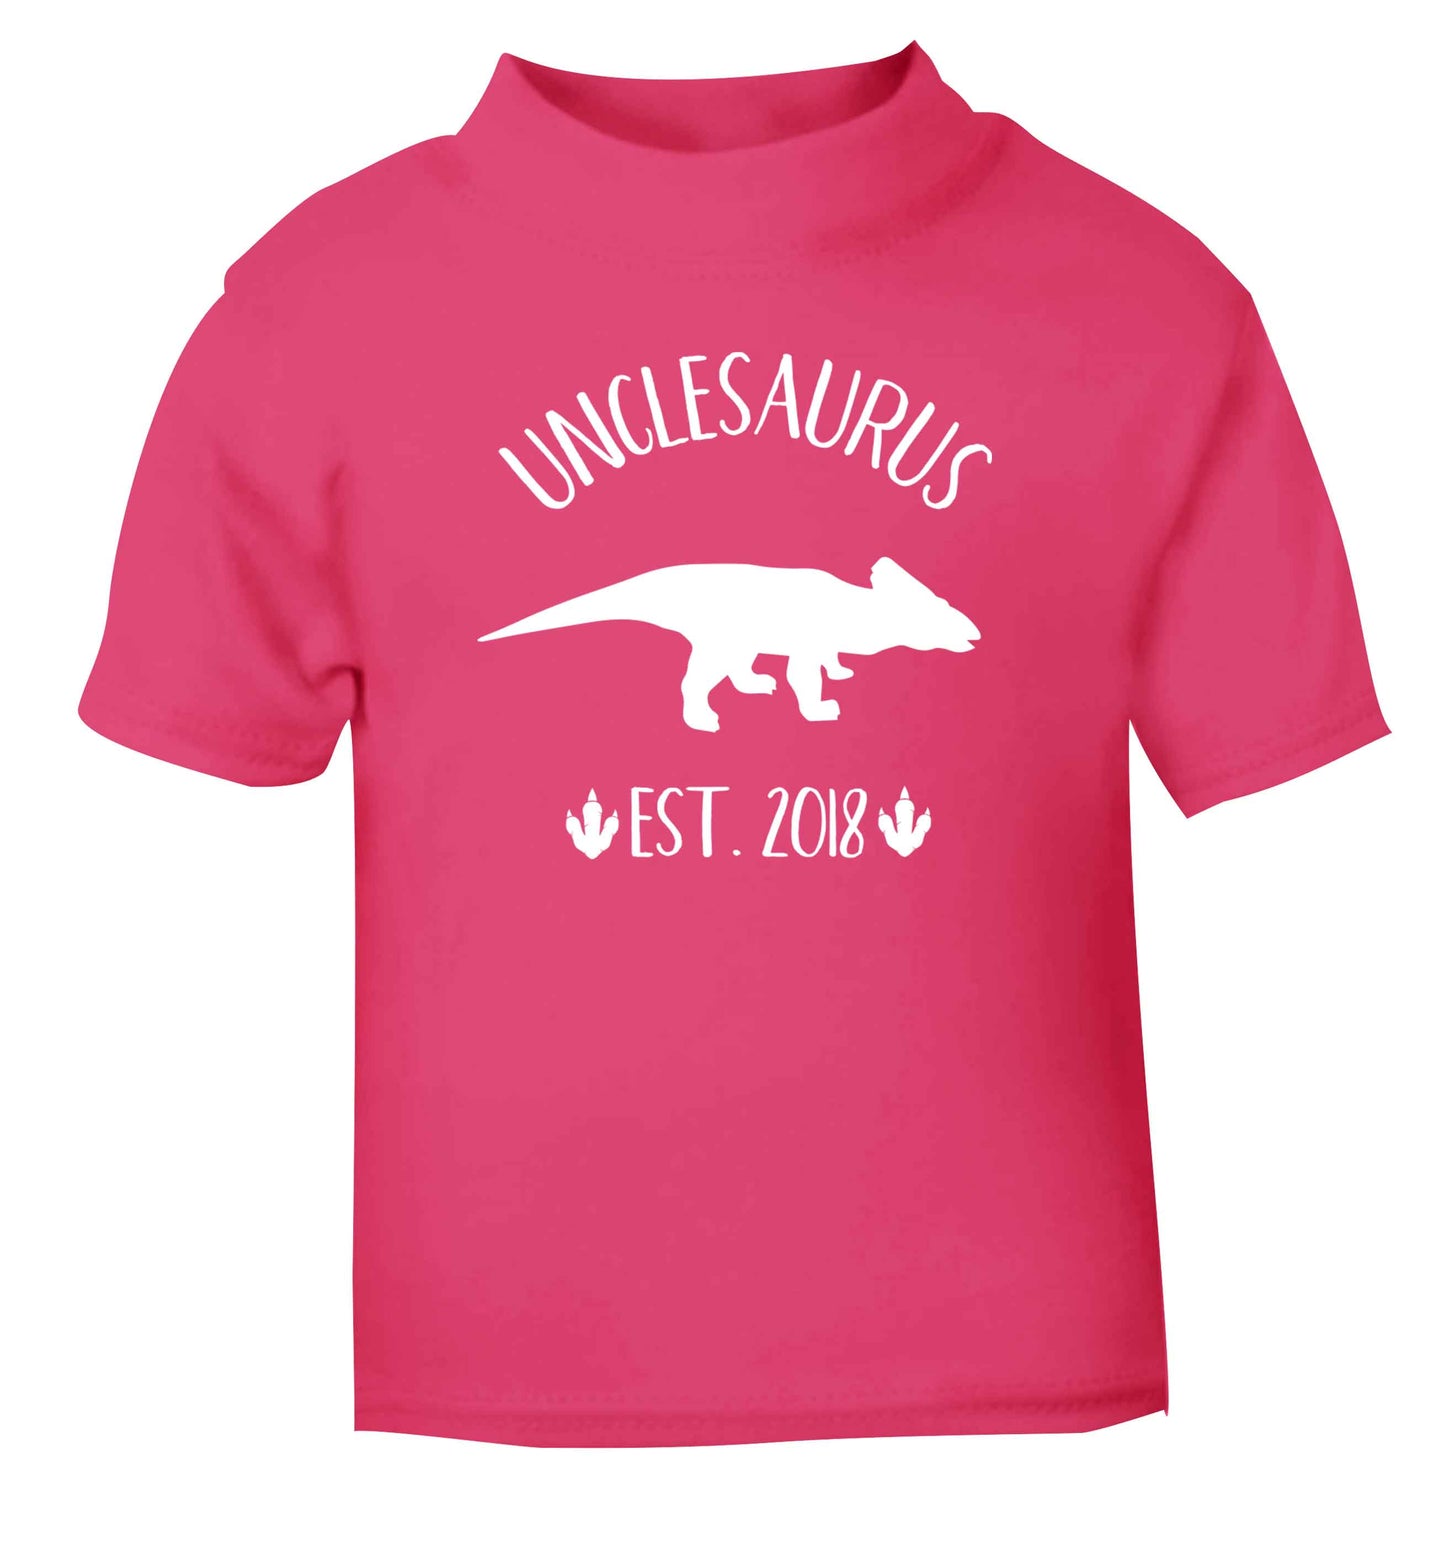 Personalised unclesaurus since (custom date) pink Baby Toddler Tshirt 2 Years